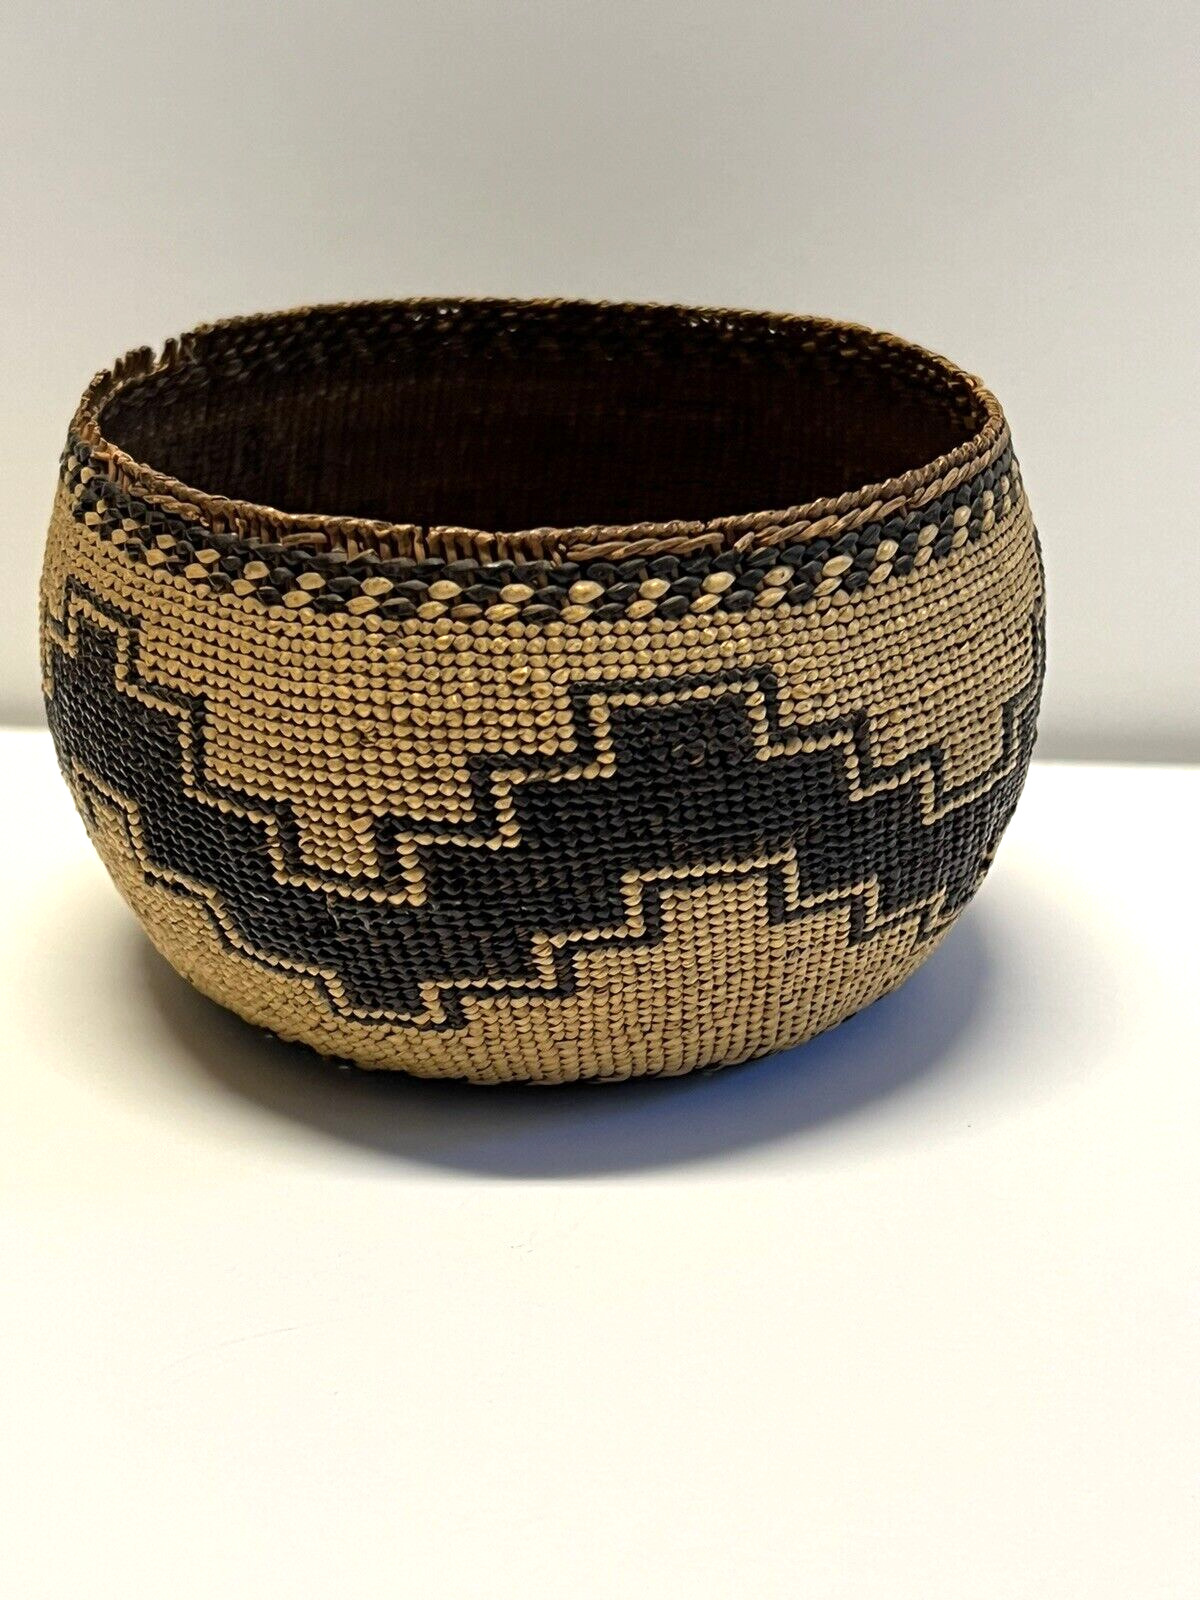 Original Native American Indian Hand Woven Basket, 1890’s - 1920’s;  Lot 11